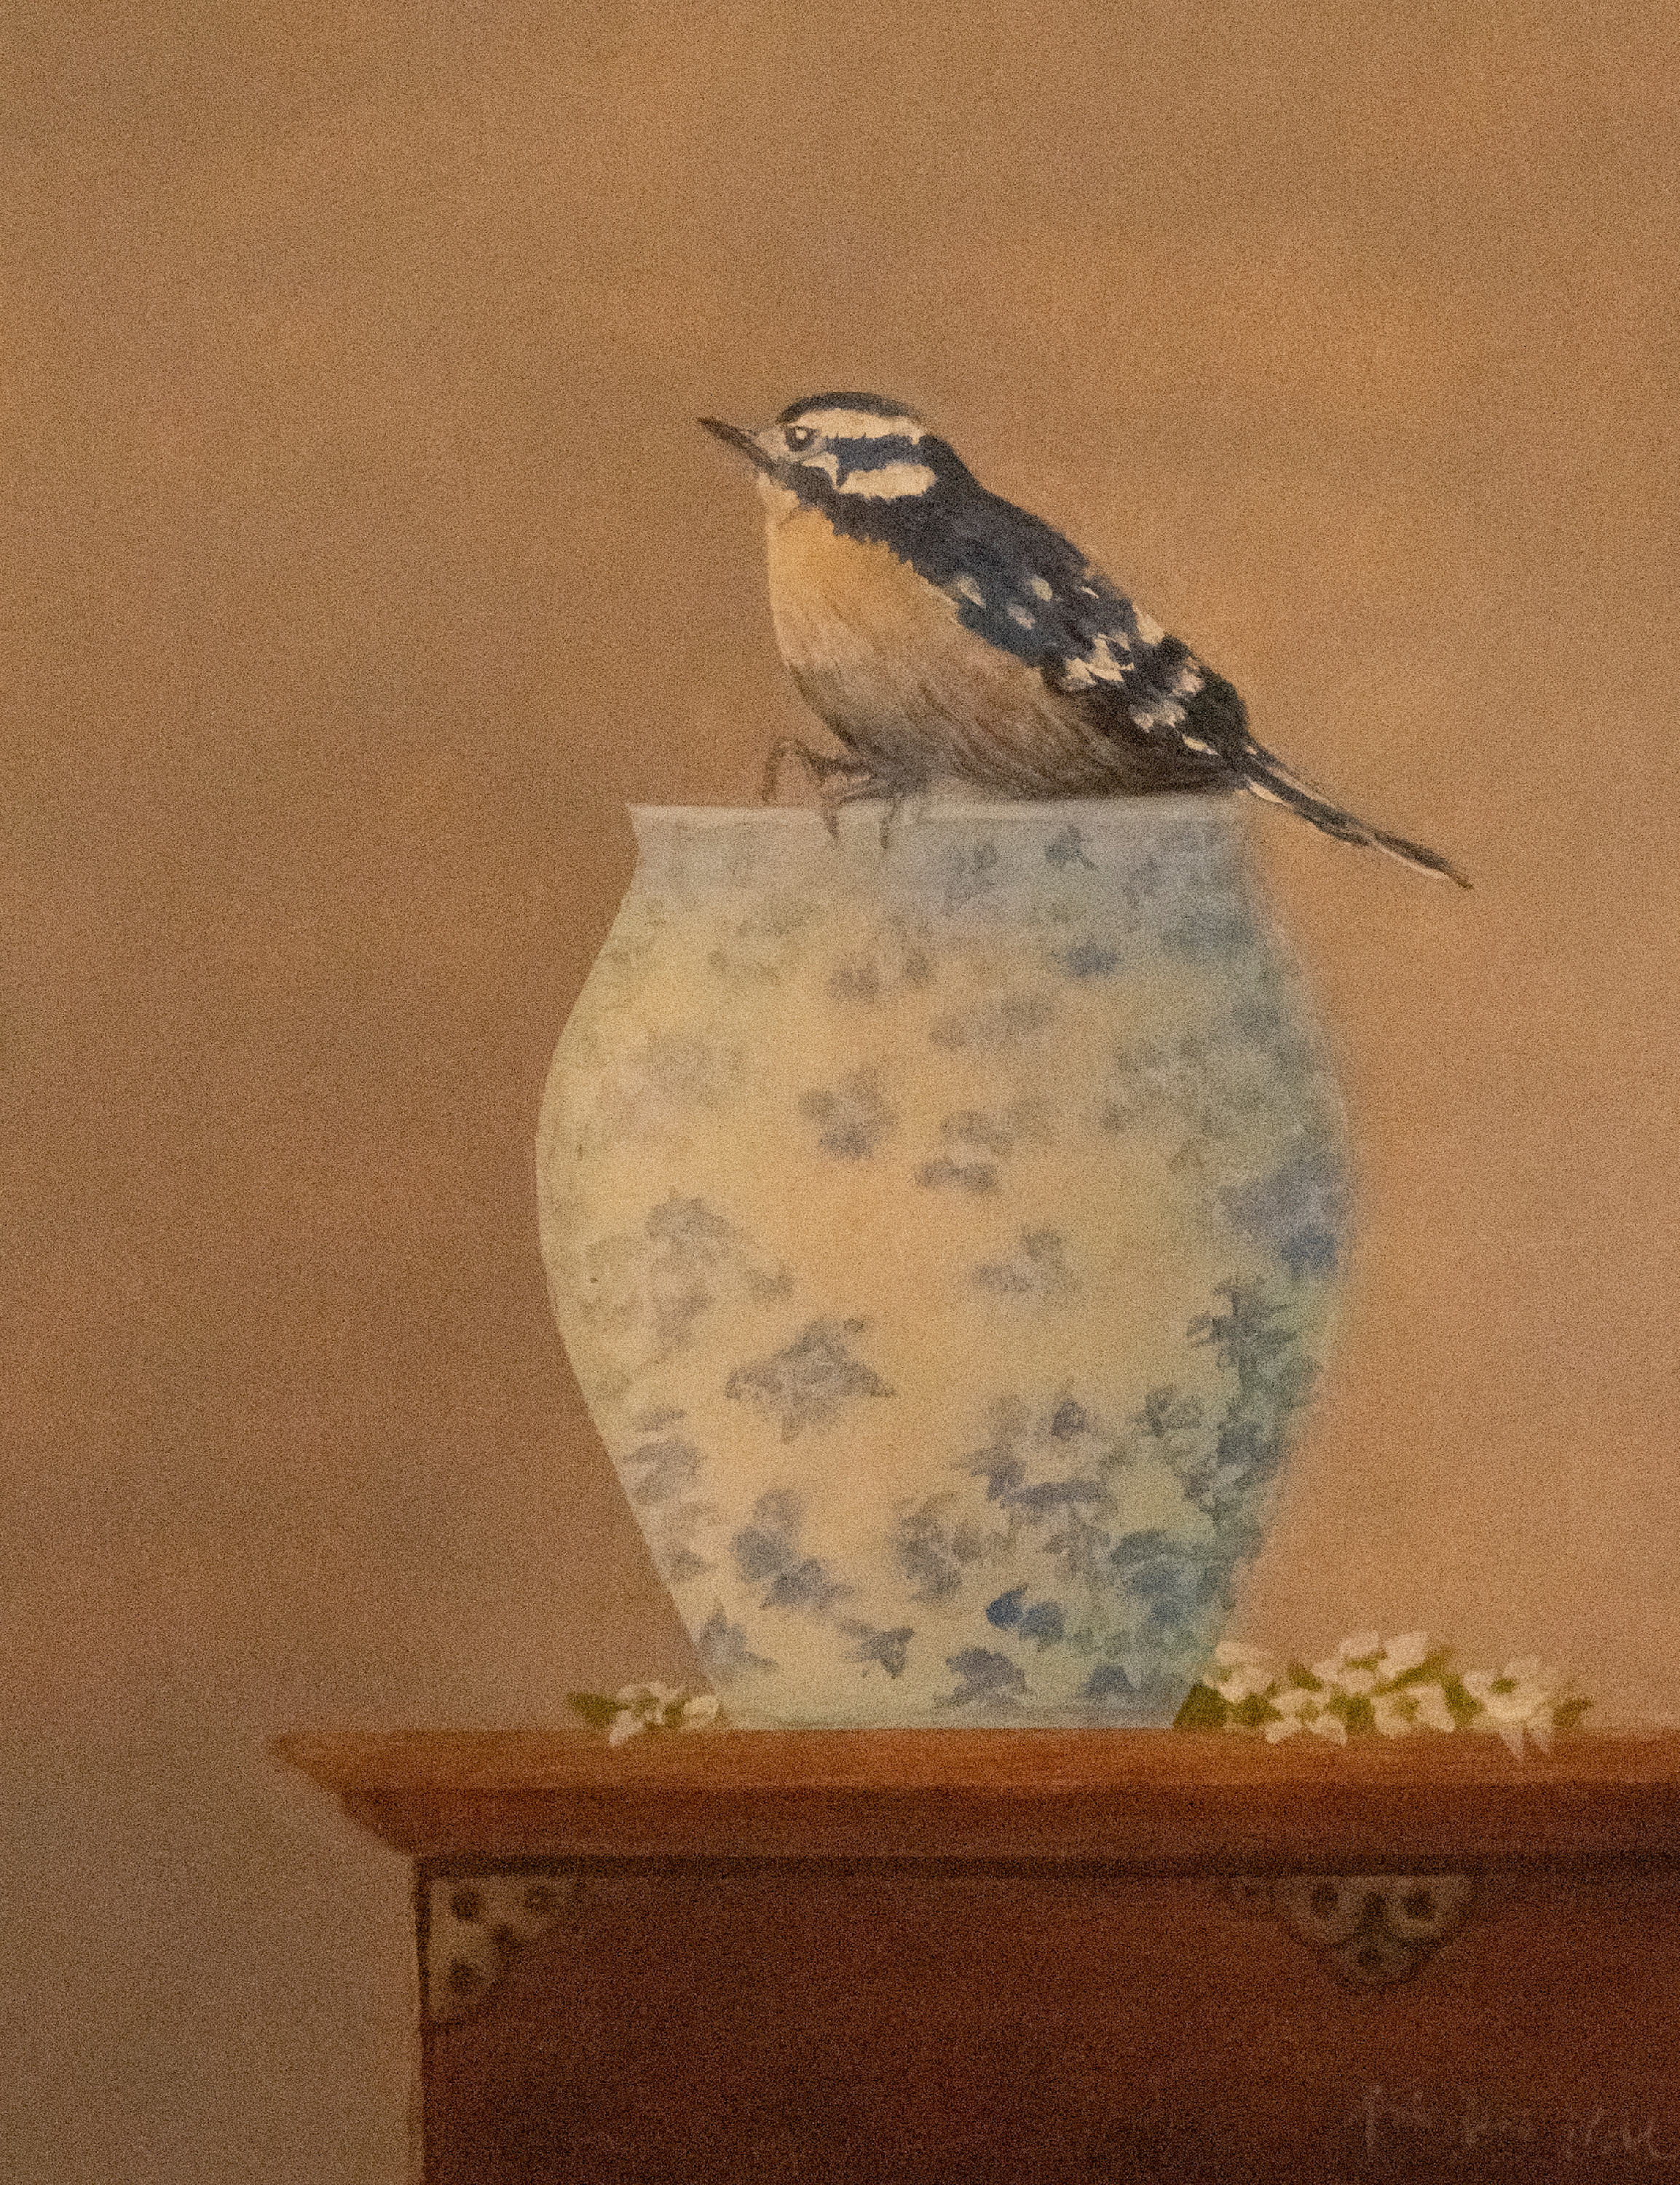 Downy woodpecker and vase kodqes